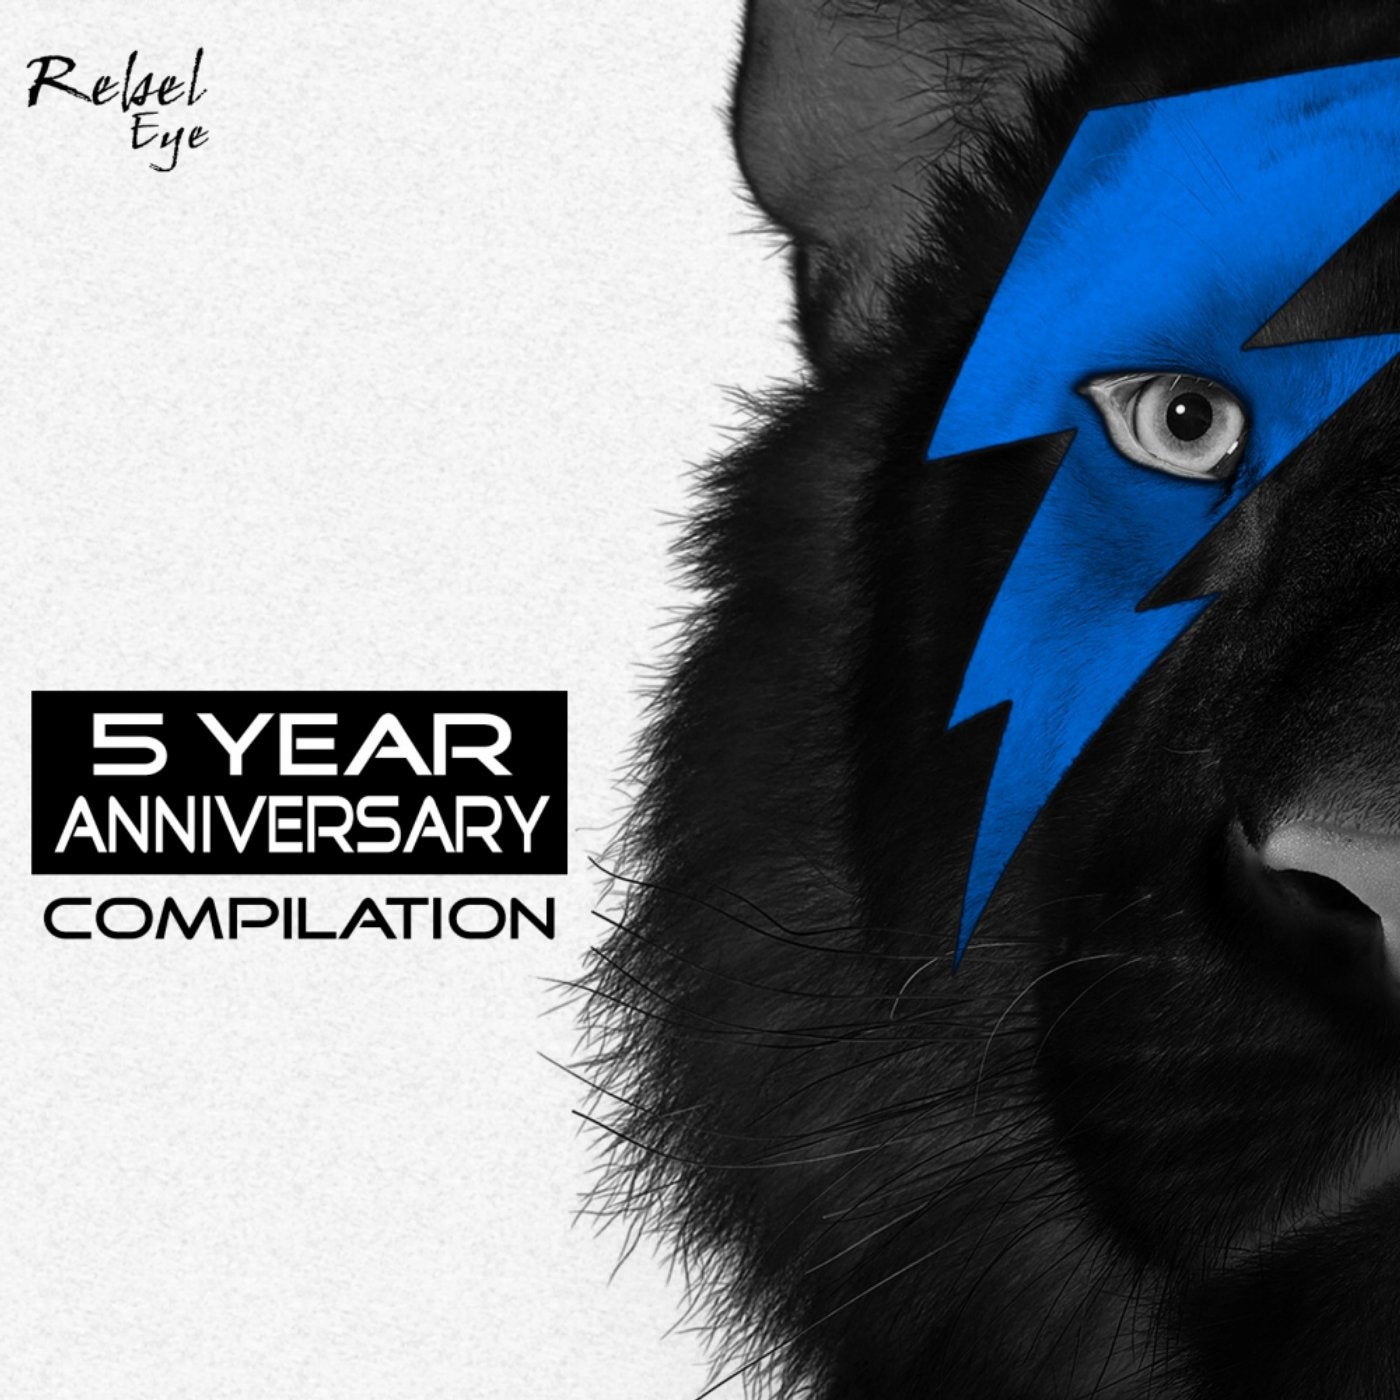 Rebel Eye 5 Year Anniversary Compilation